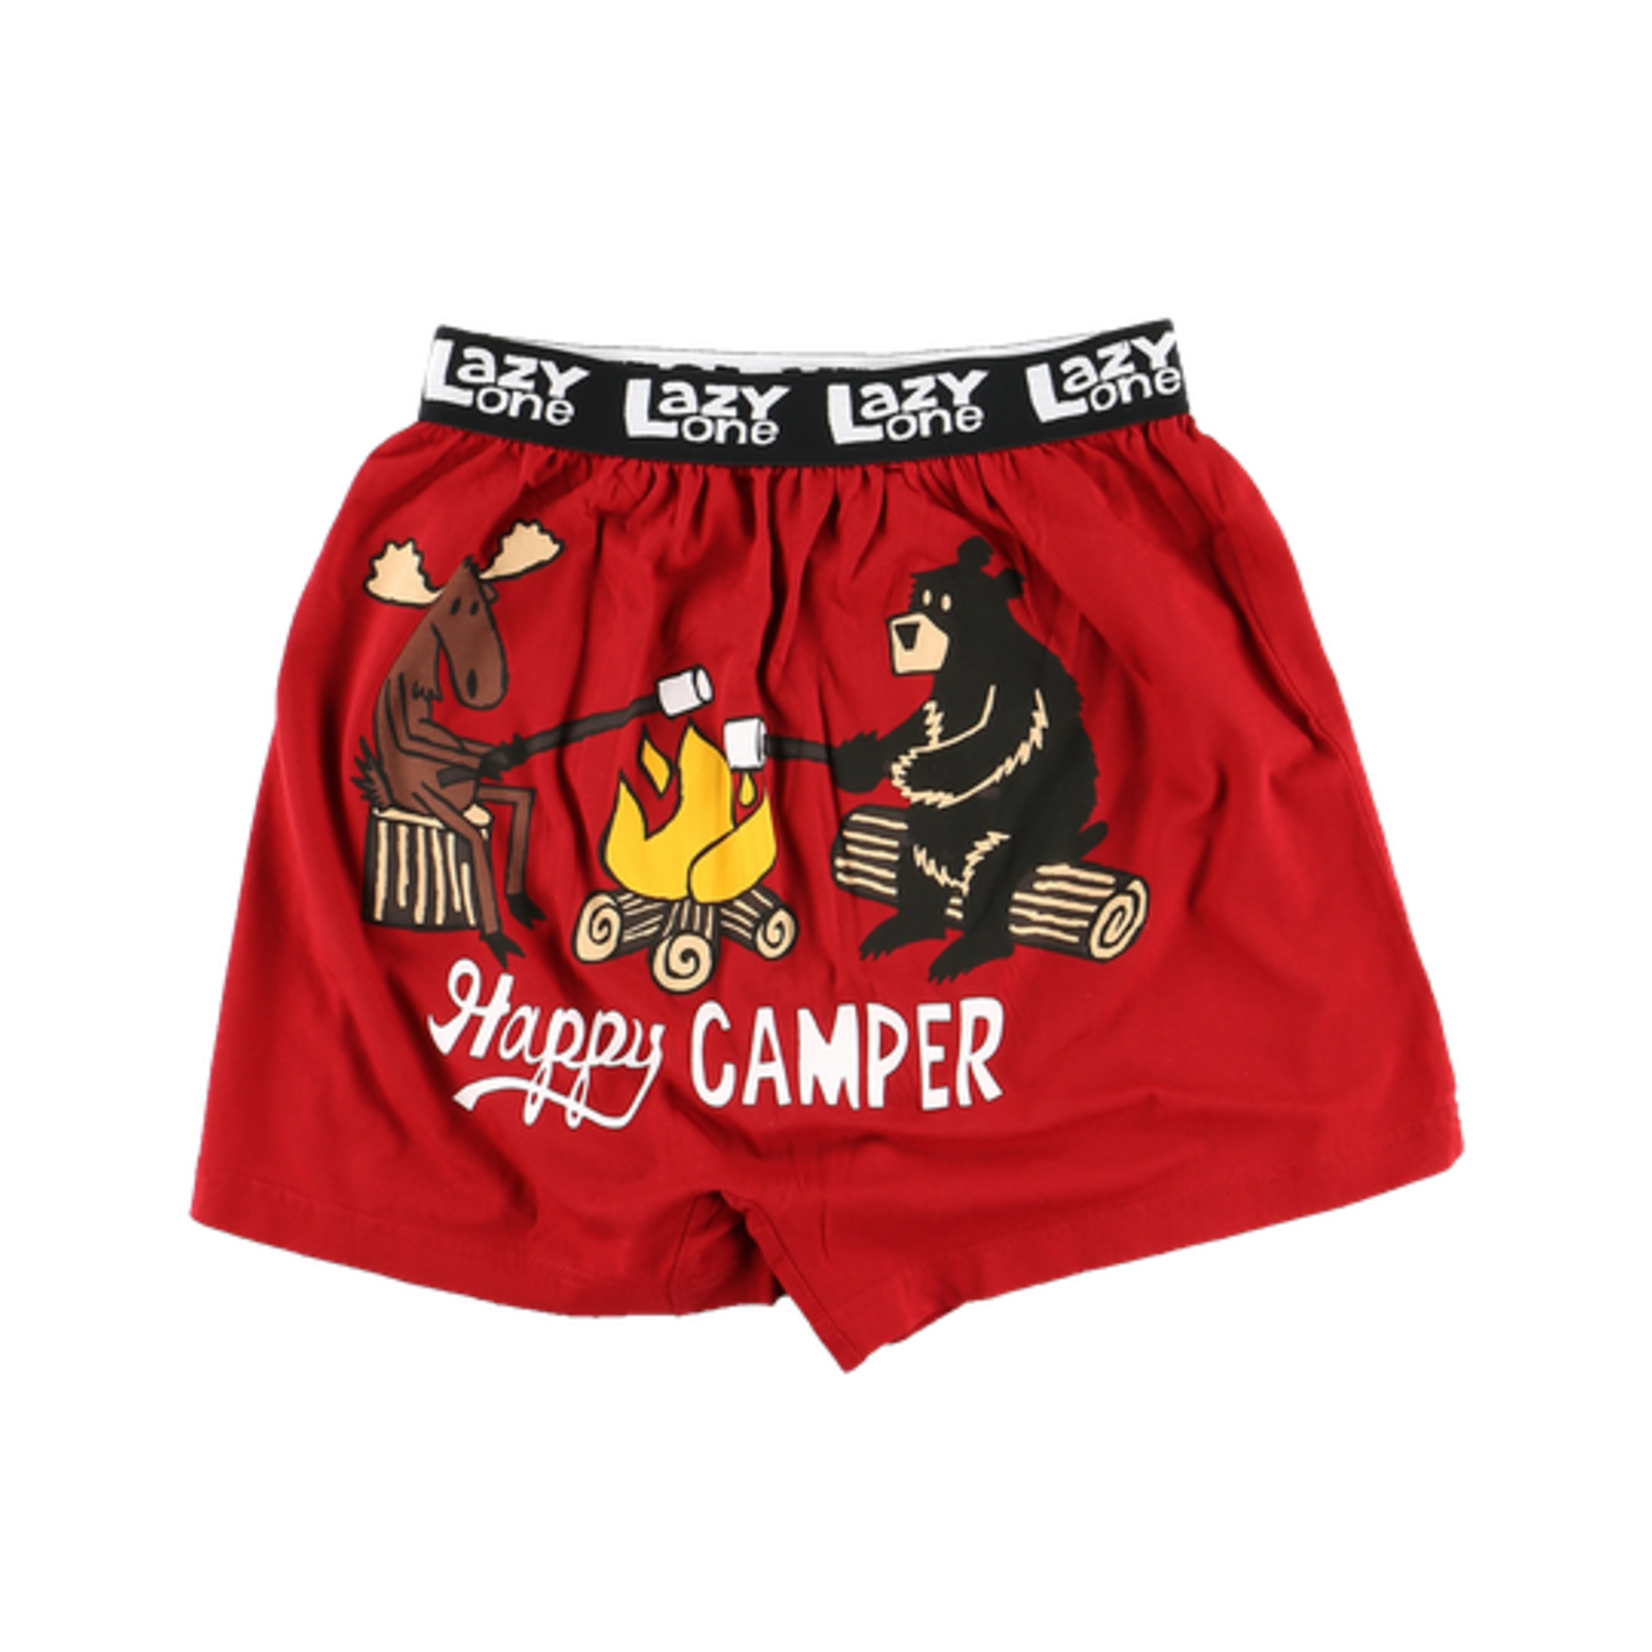 Happy Camper boxers